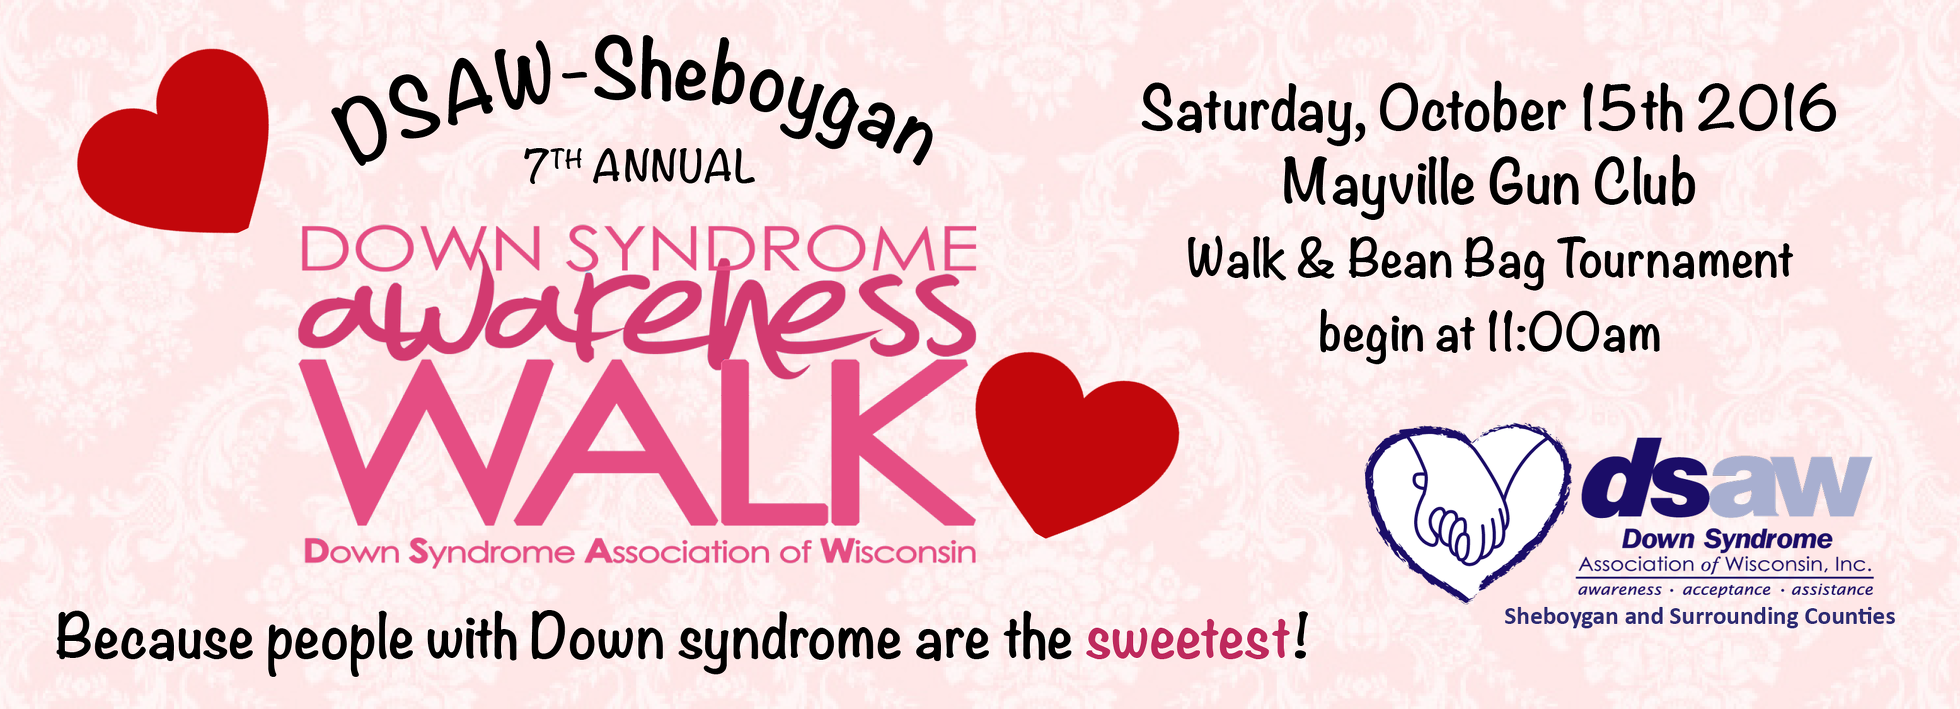 Sheboygan Down Syndrome Awareness Walk 2016